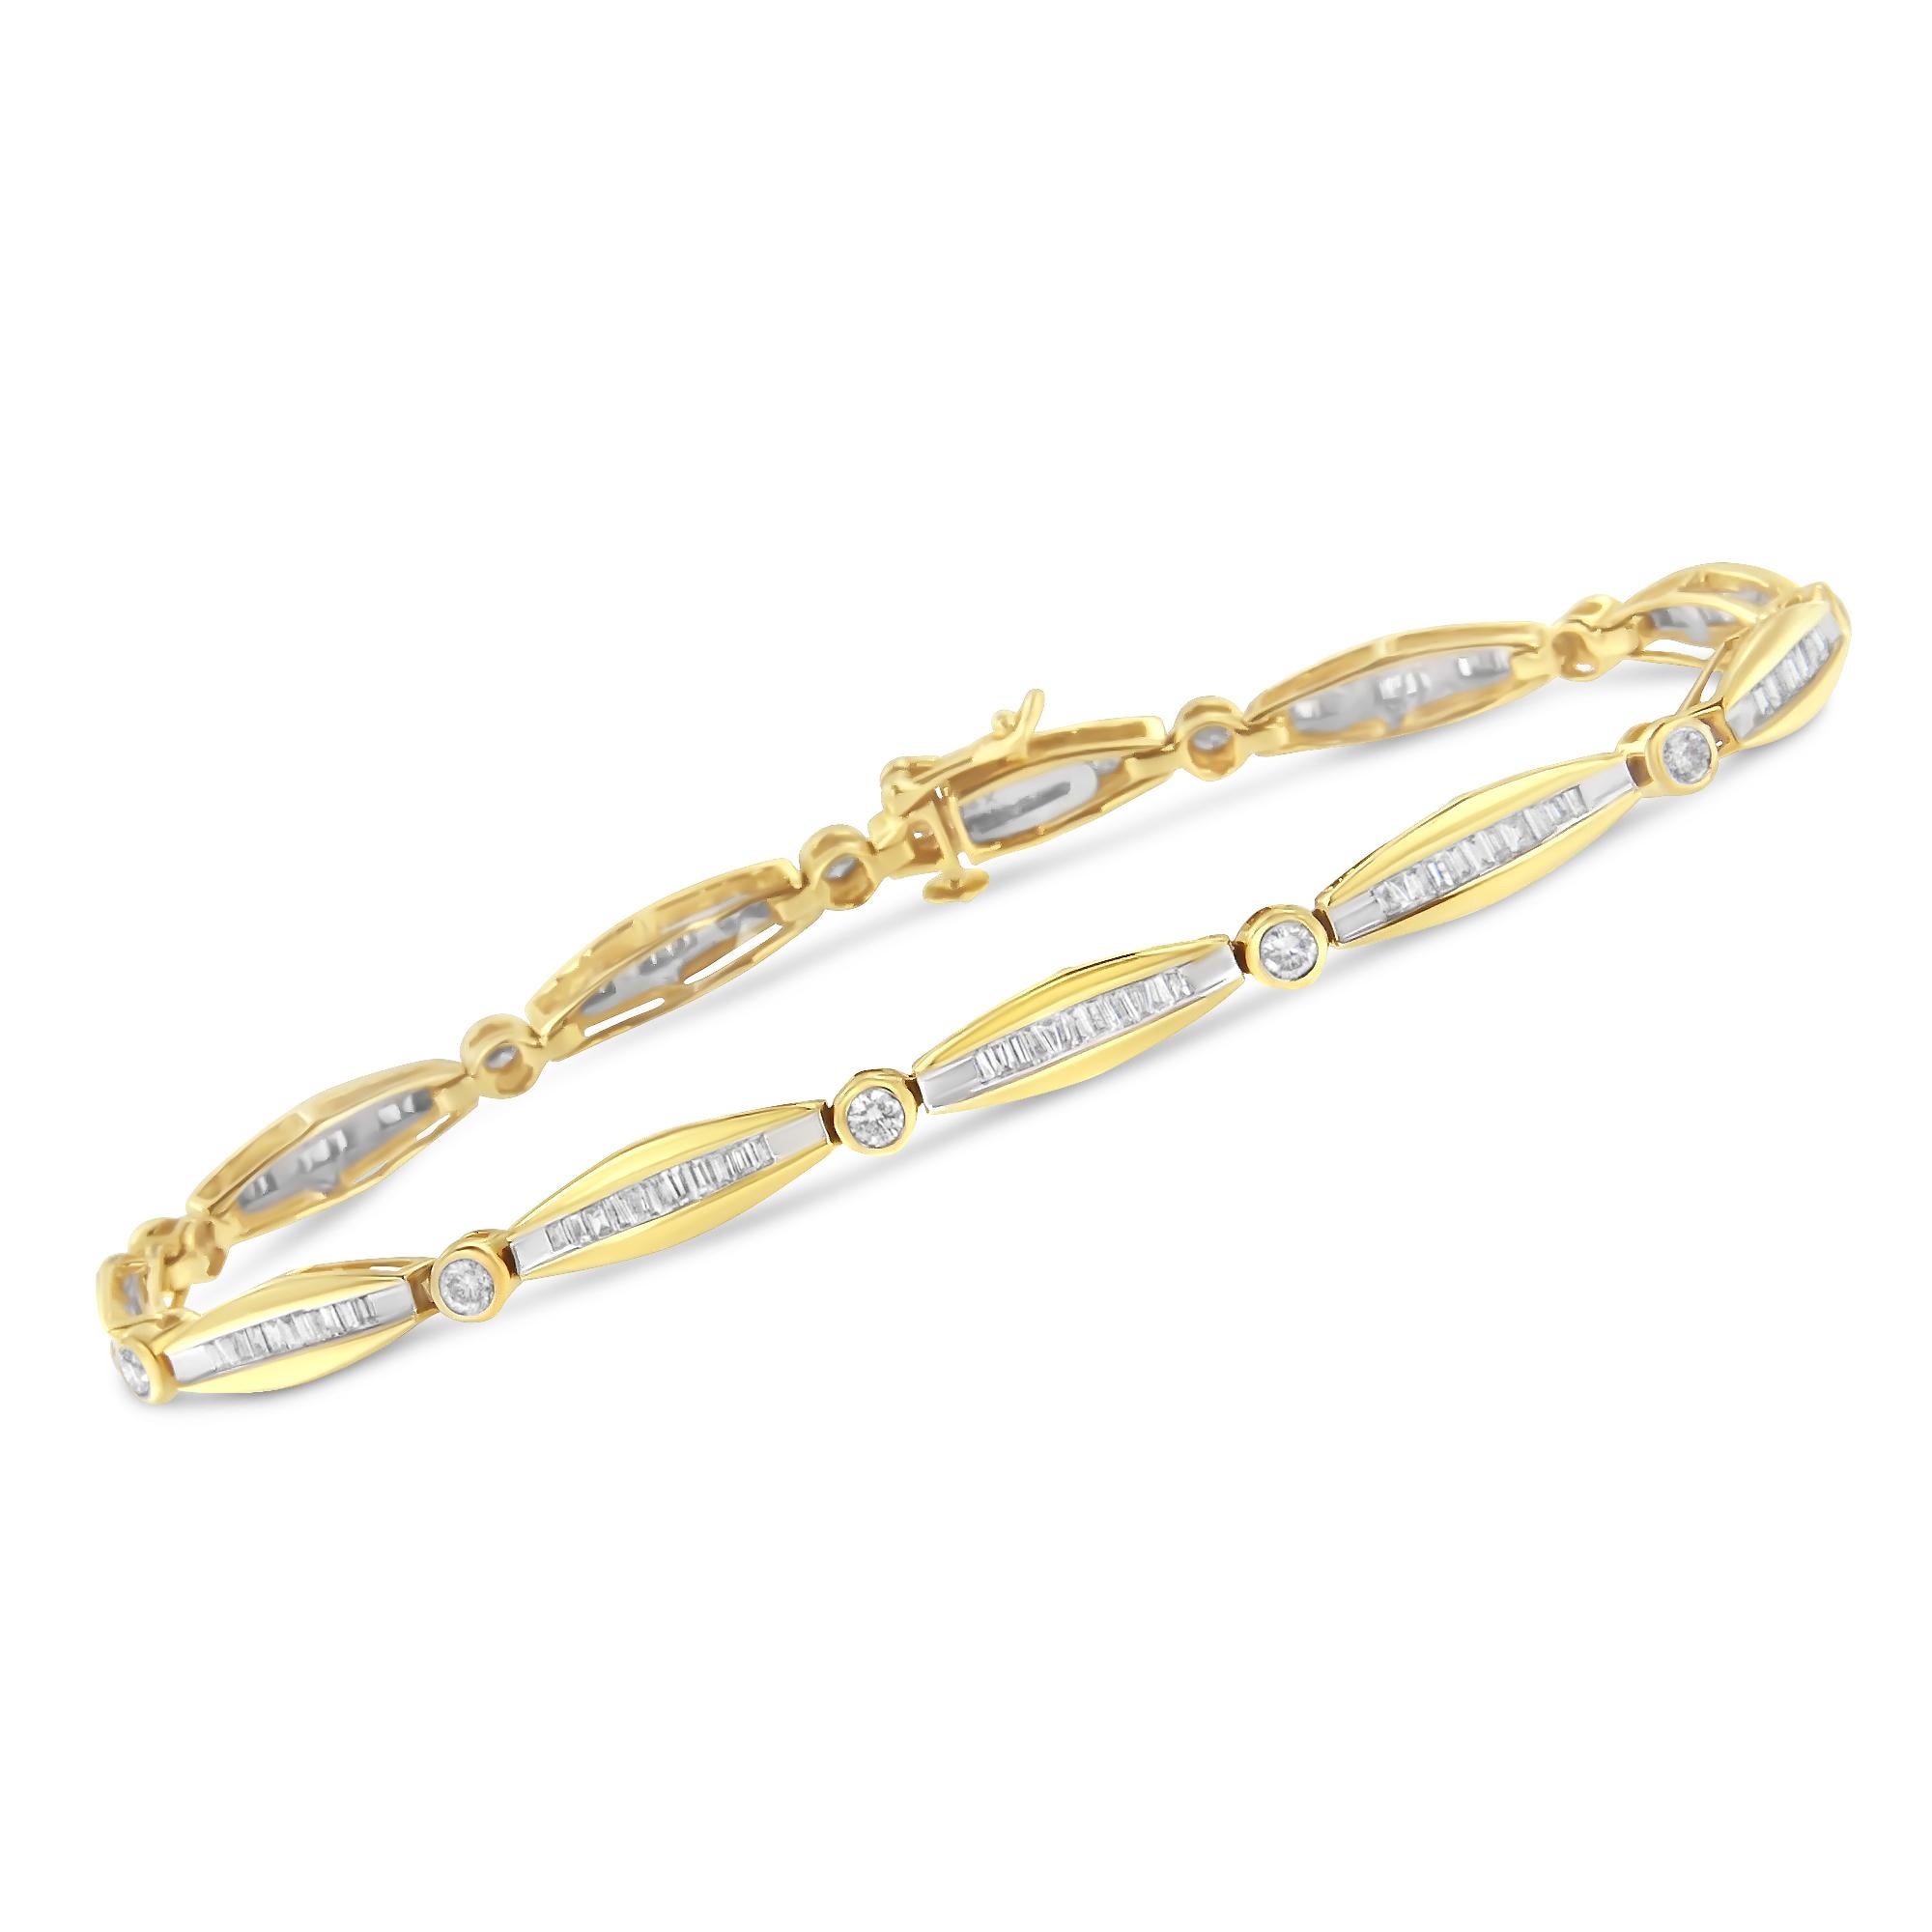 2 carat diamond tennis bracelet yellow gold